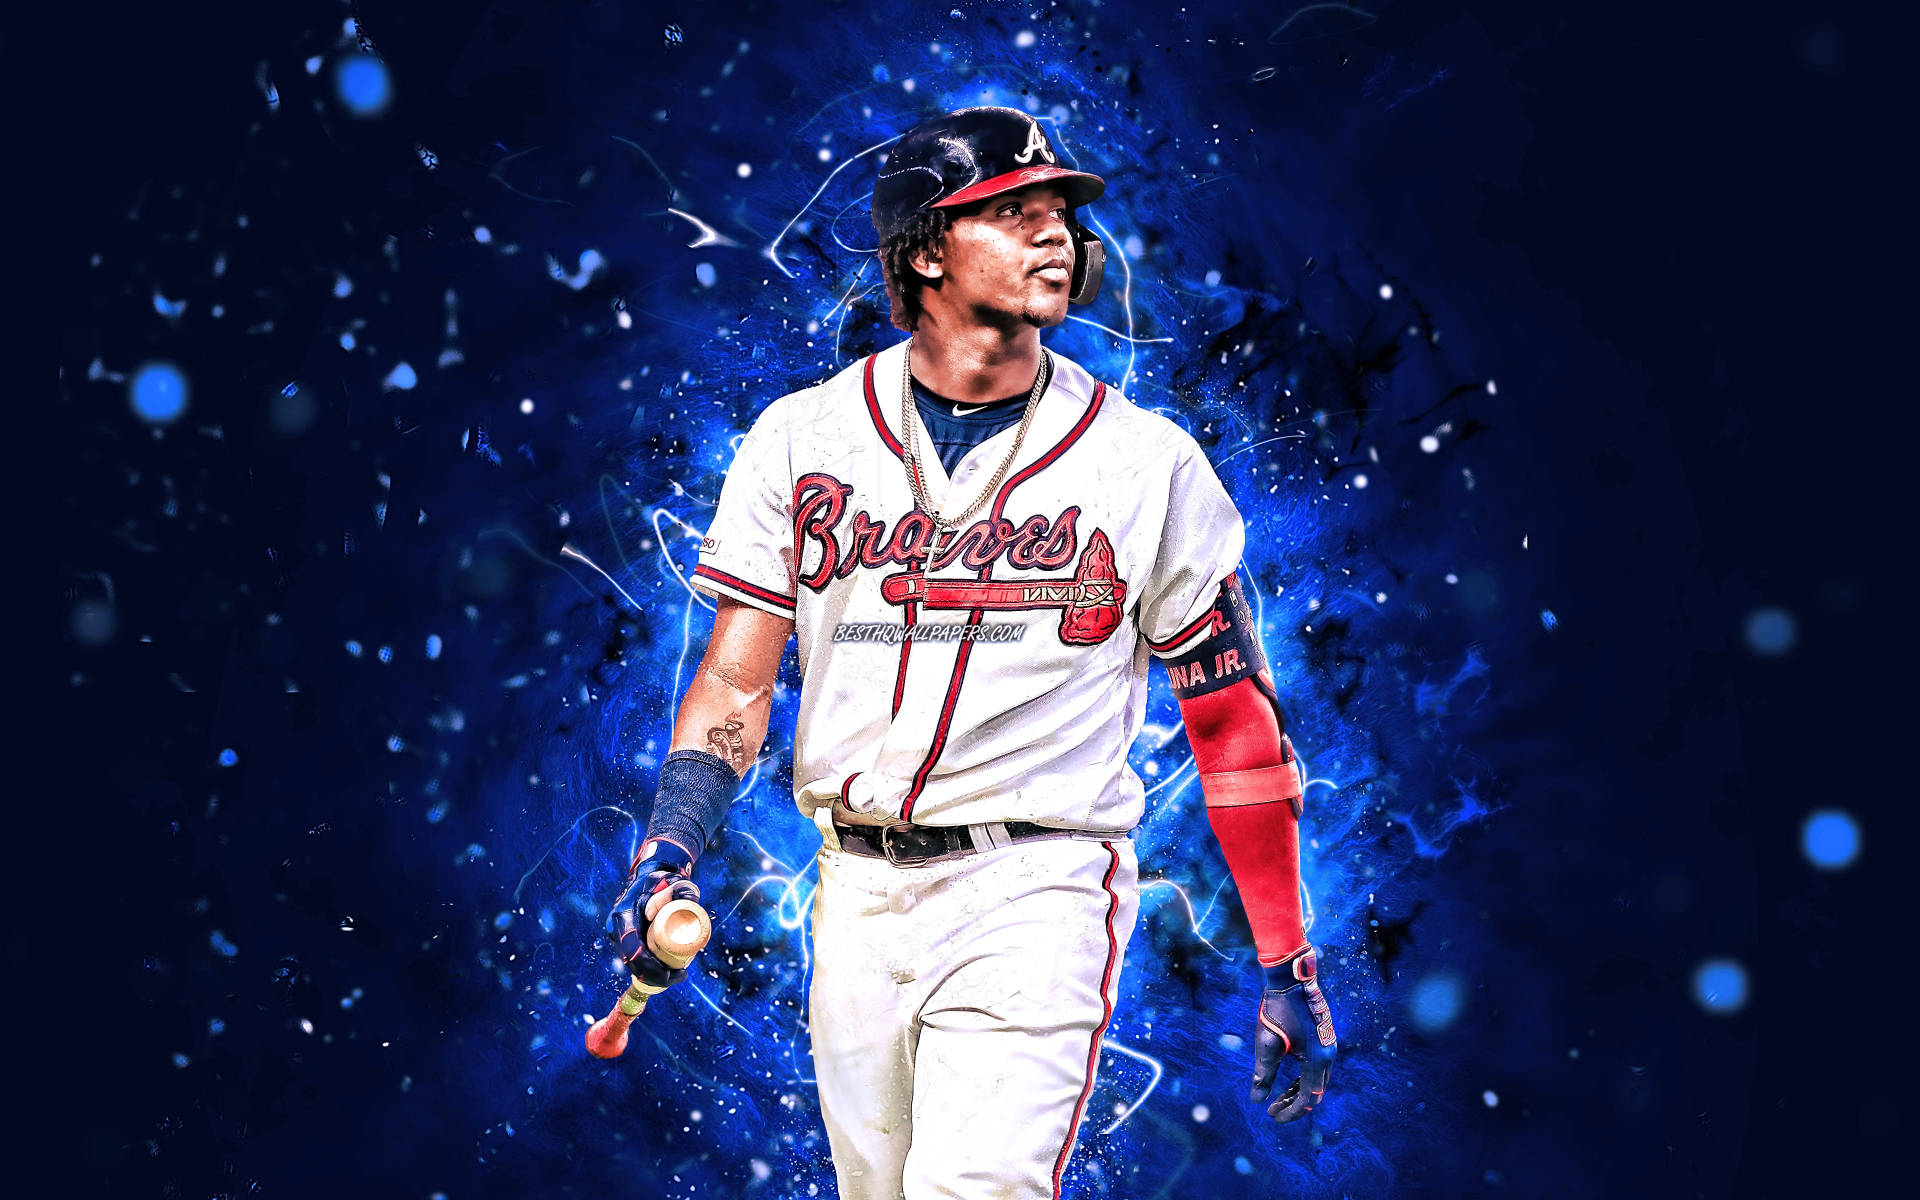 Atlanta Braves Player Digital Art Background